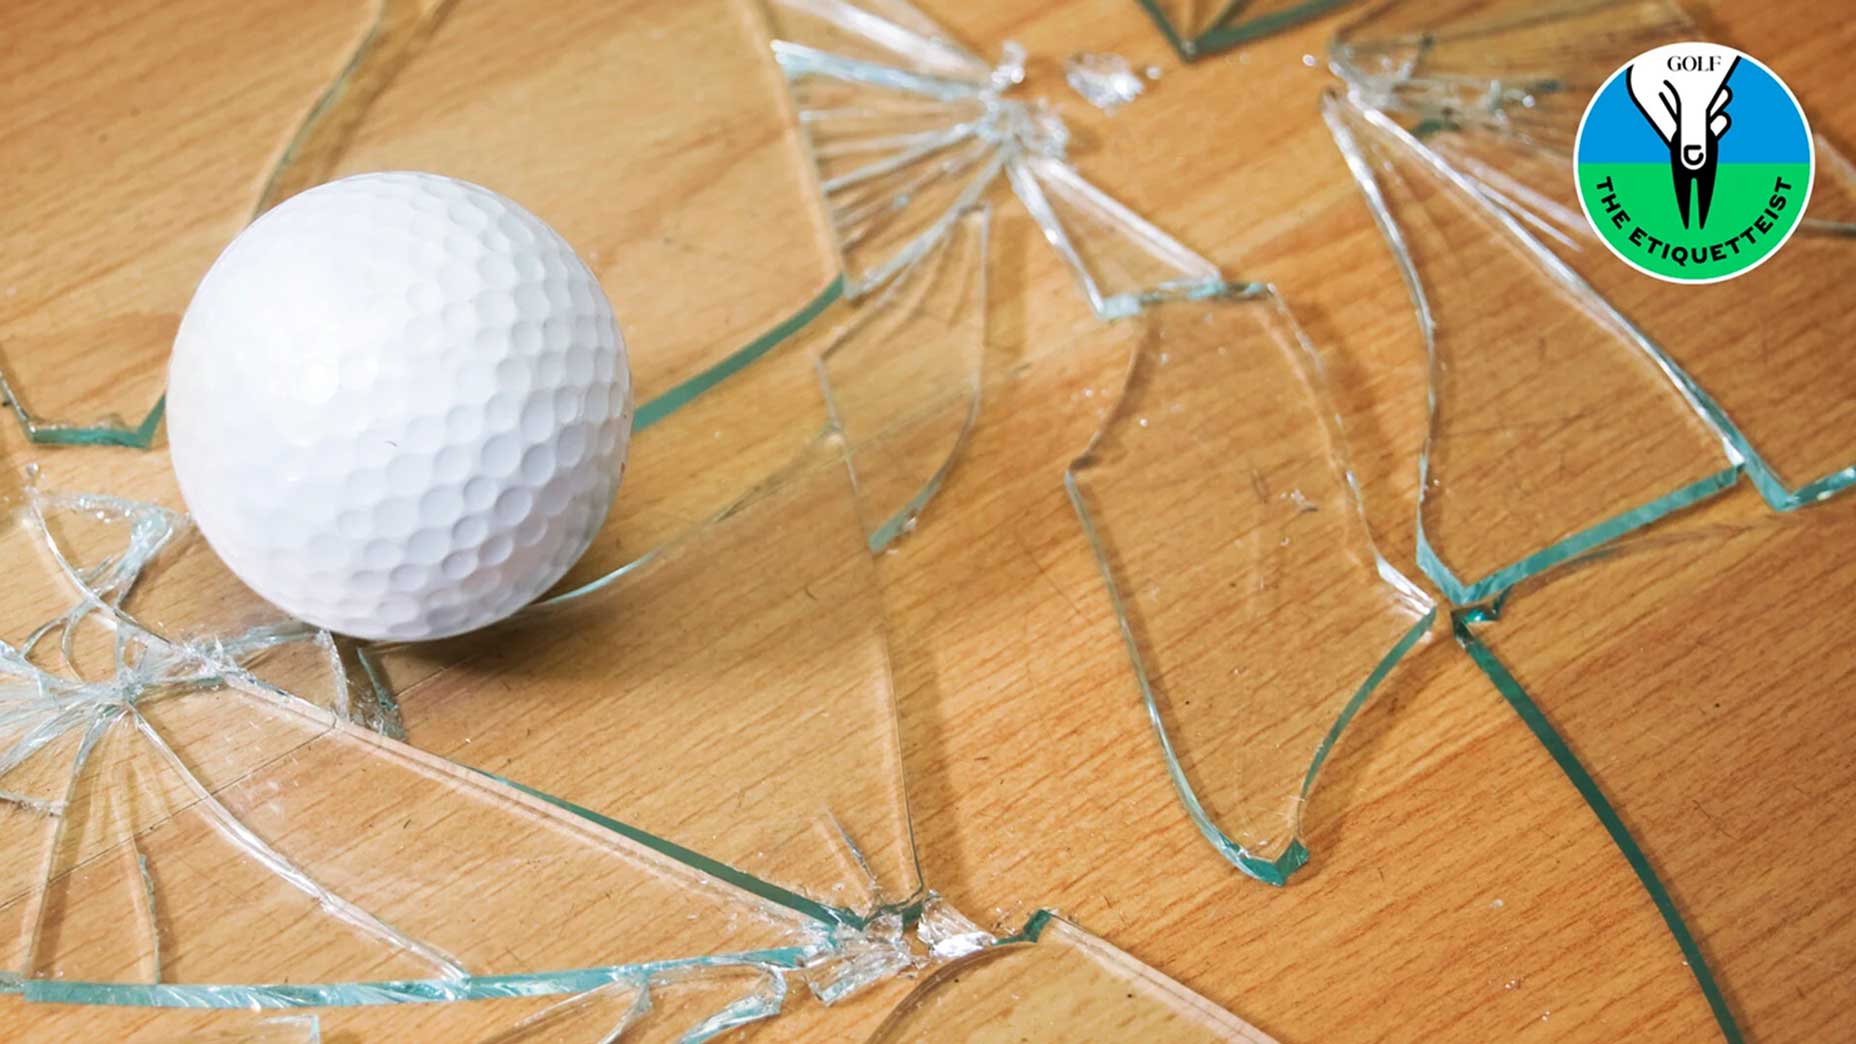 a golf ball hits a window